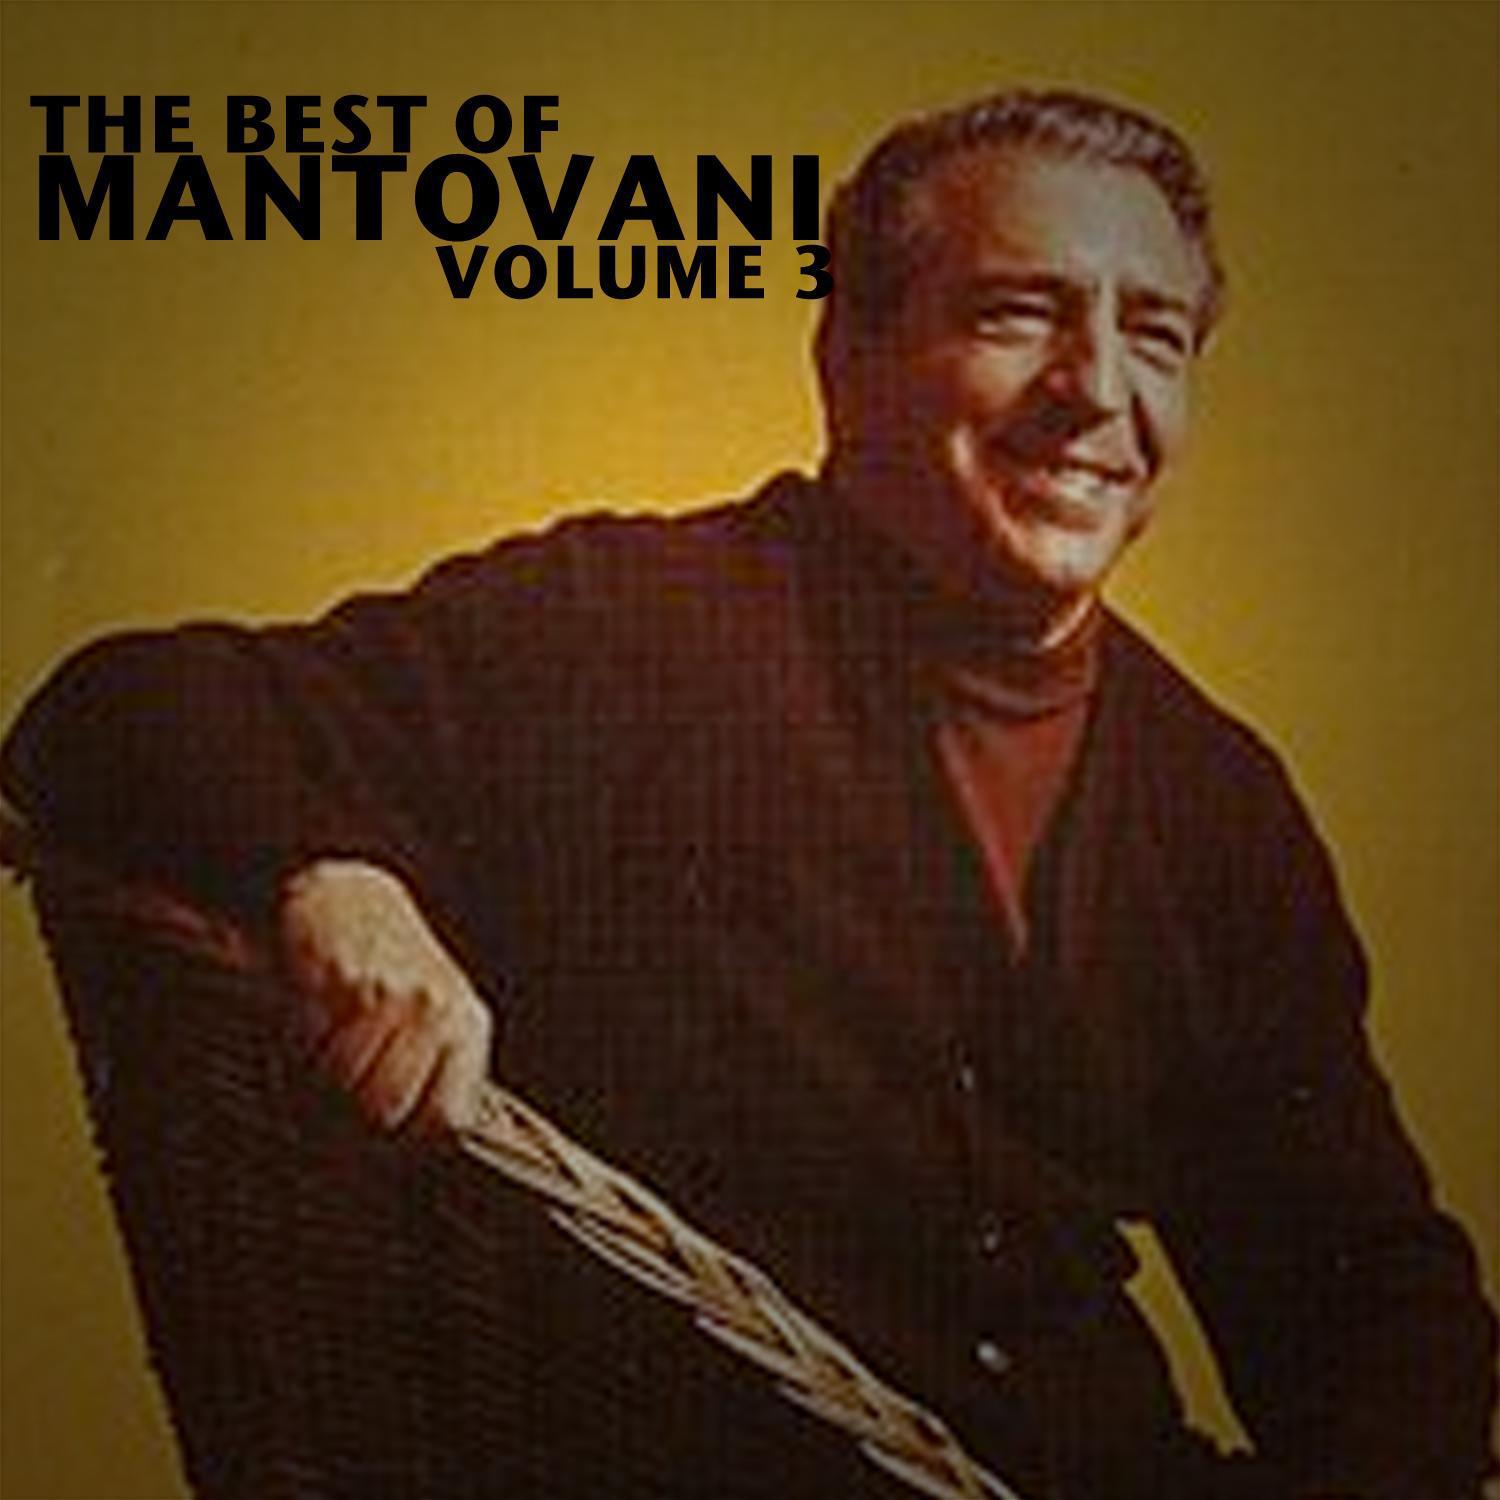 The Best of Mantovani Volume 3